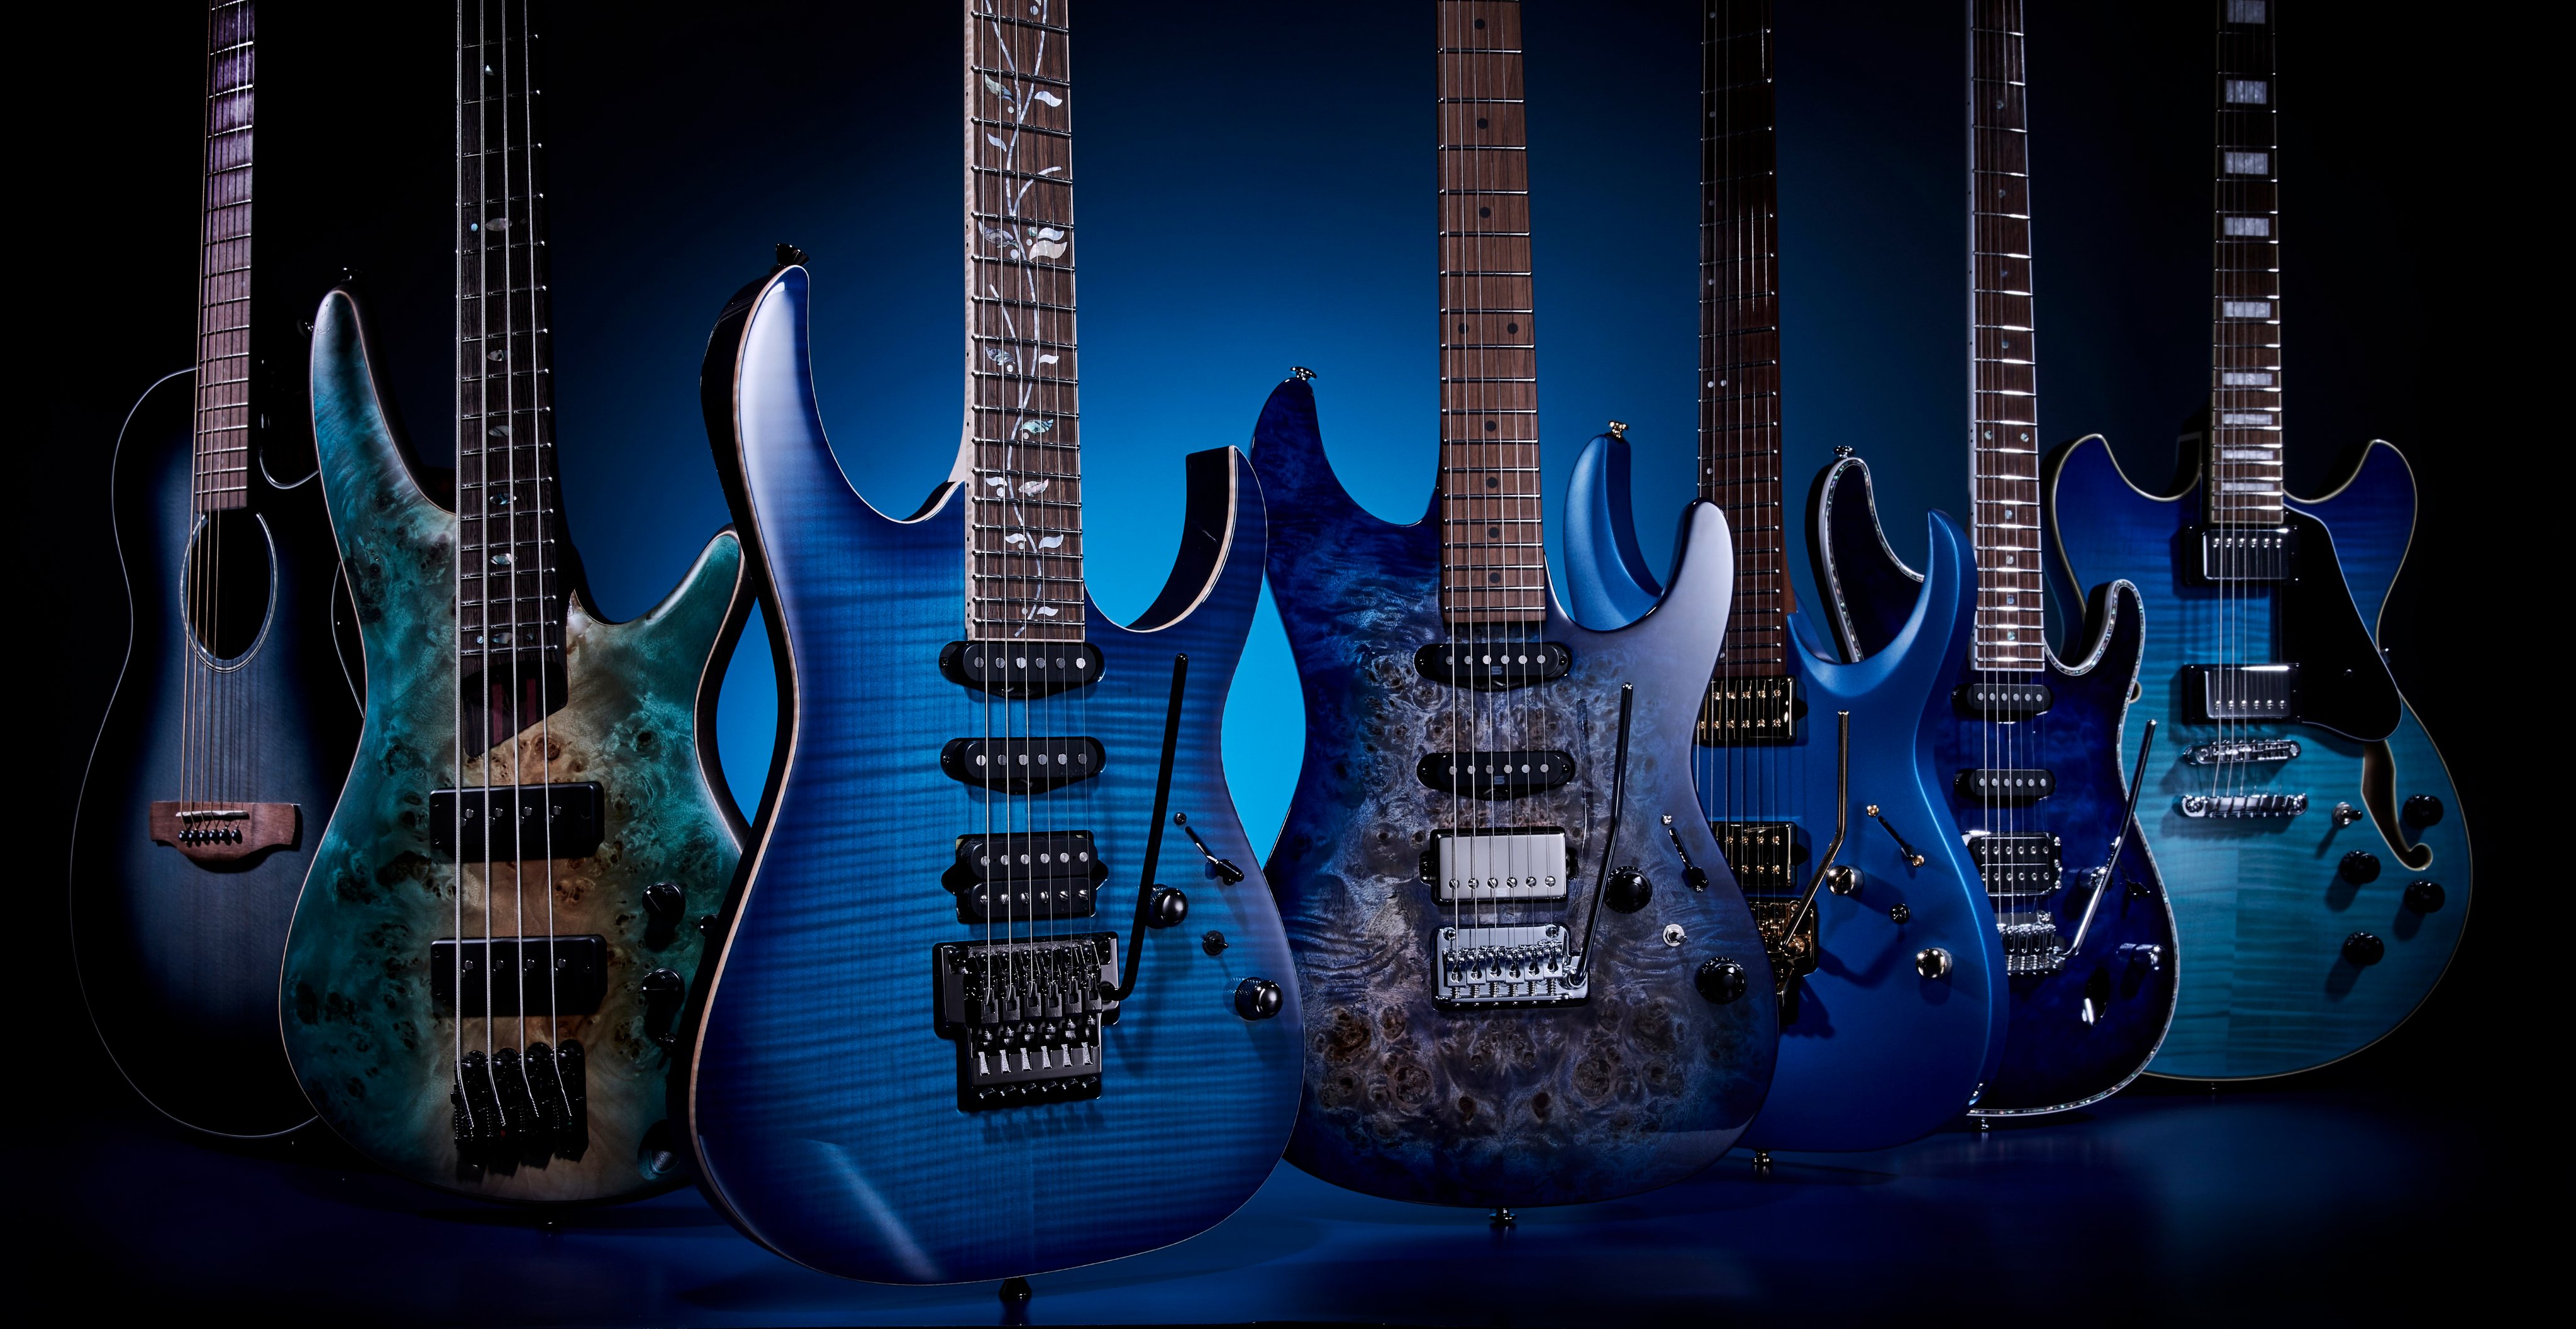 Ibanezjapan Ibanezの 青いギター をご紹介 Rg8570z Rbs Royal Blue Sapphire Ibanez最高峰のエレクトリック ギター J Custom より Rg8570z Rbs T Co Ilgc5xmigy 僕の青いギターかっこいい選手権 青いギター 青いベース